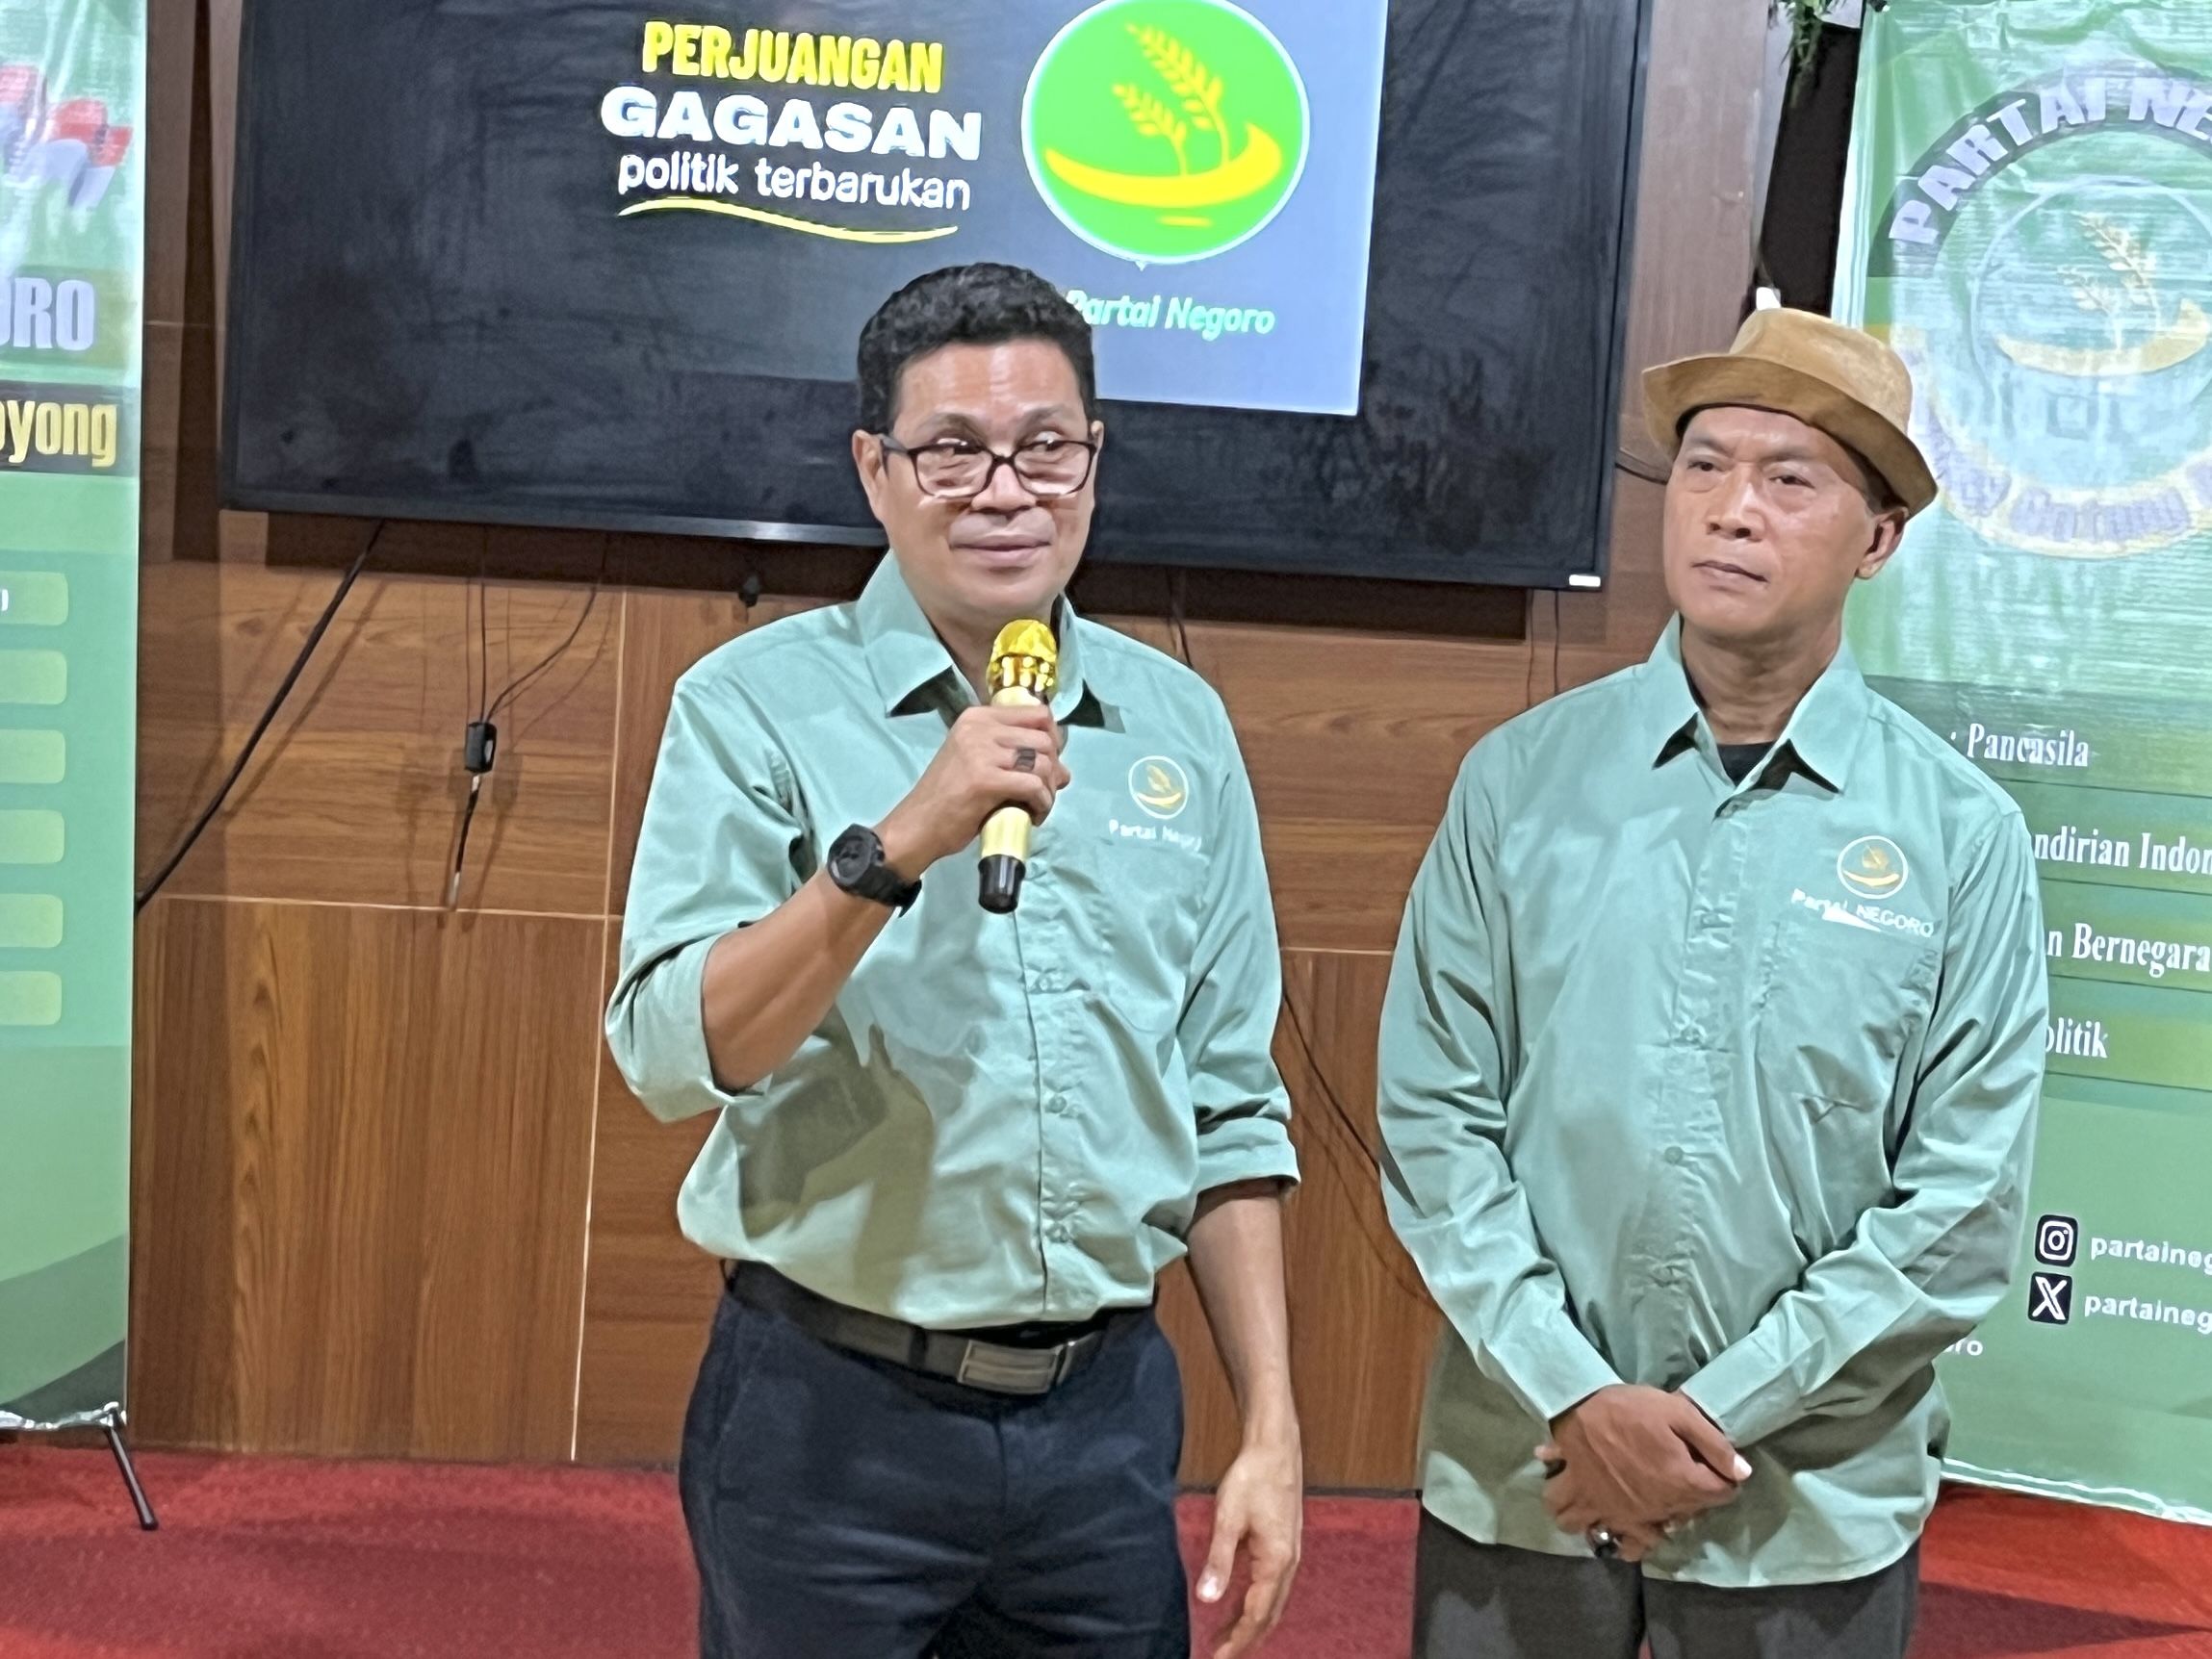 Partai Negoro Resmi Diluncurkan, Diinisiasi Faizal Assegaf